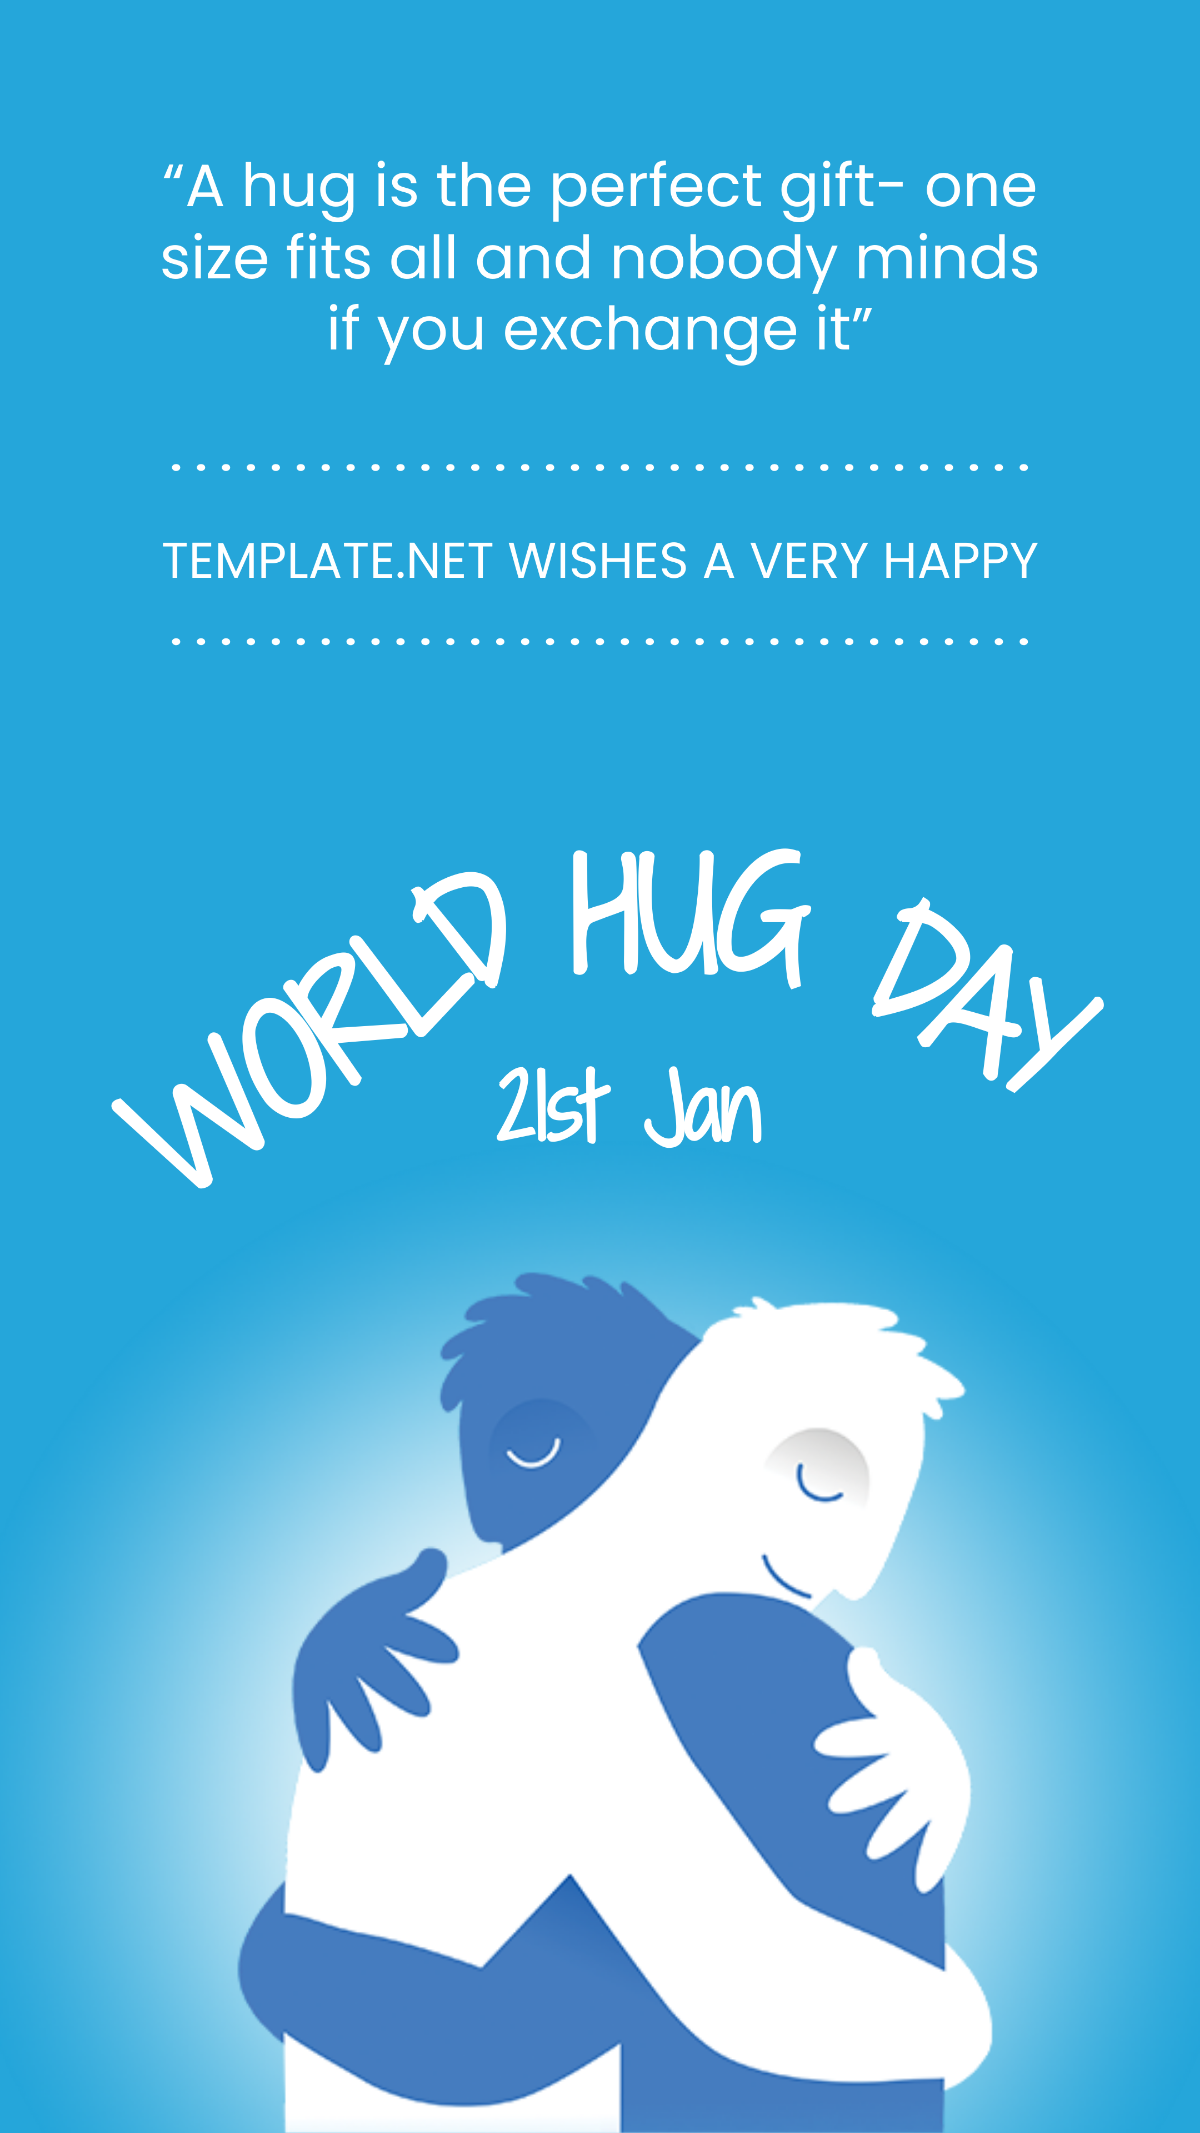 World Hug Day Whatsapp Image Template